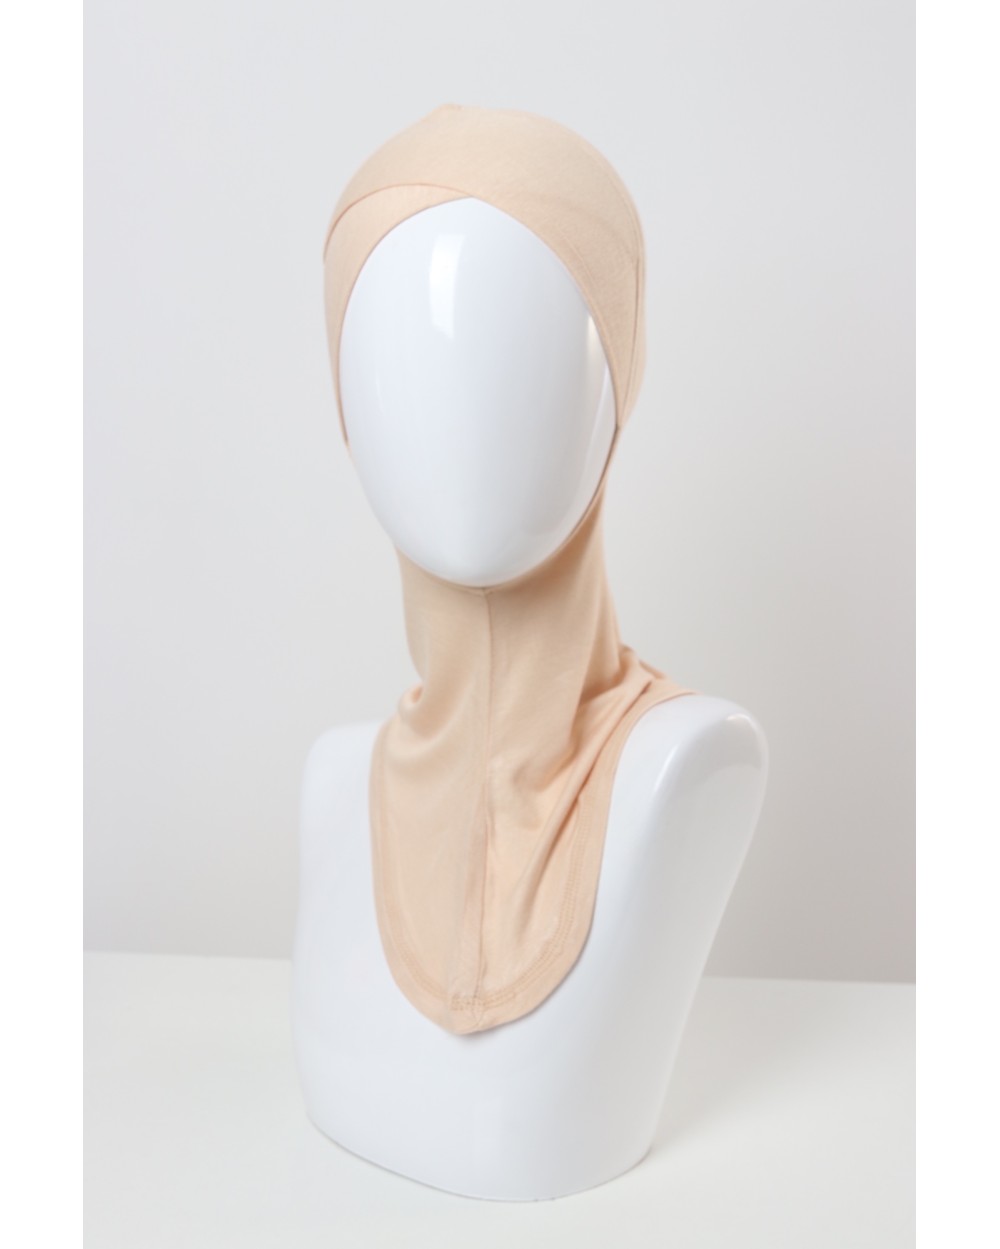 Hood - under hijab folded plain coloured